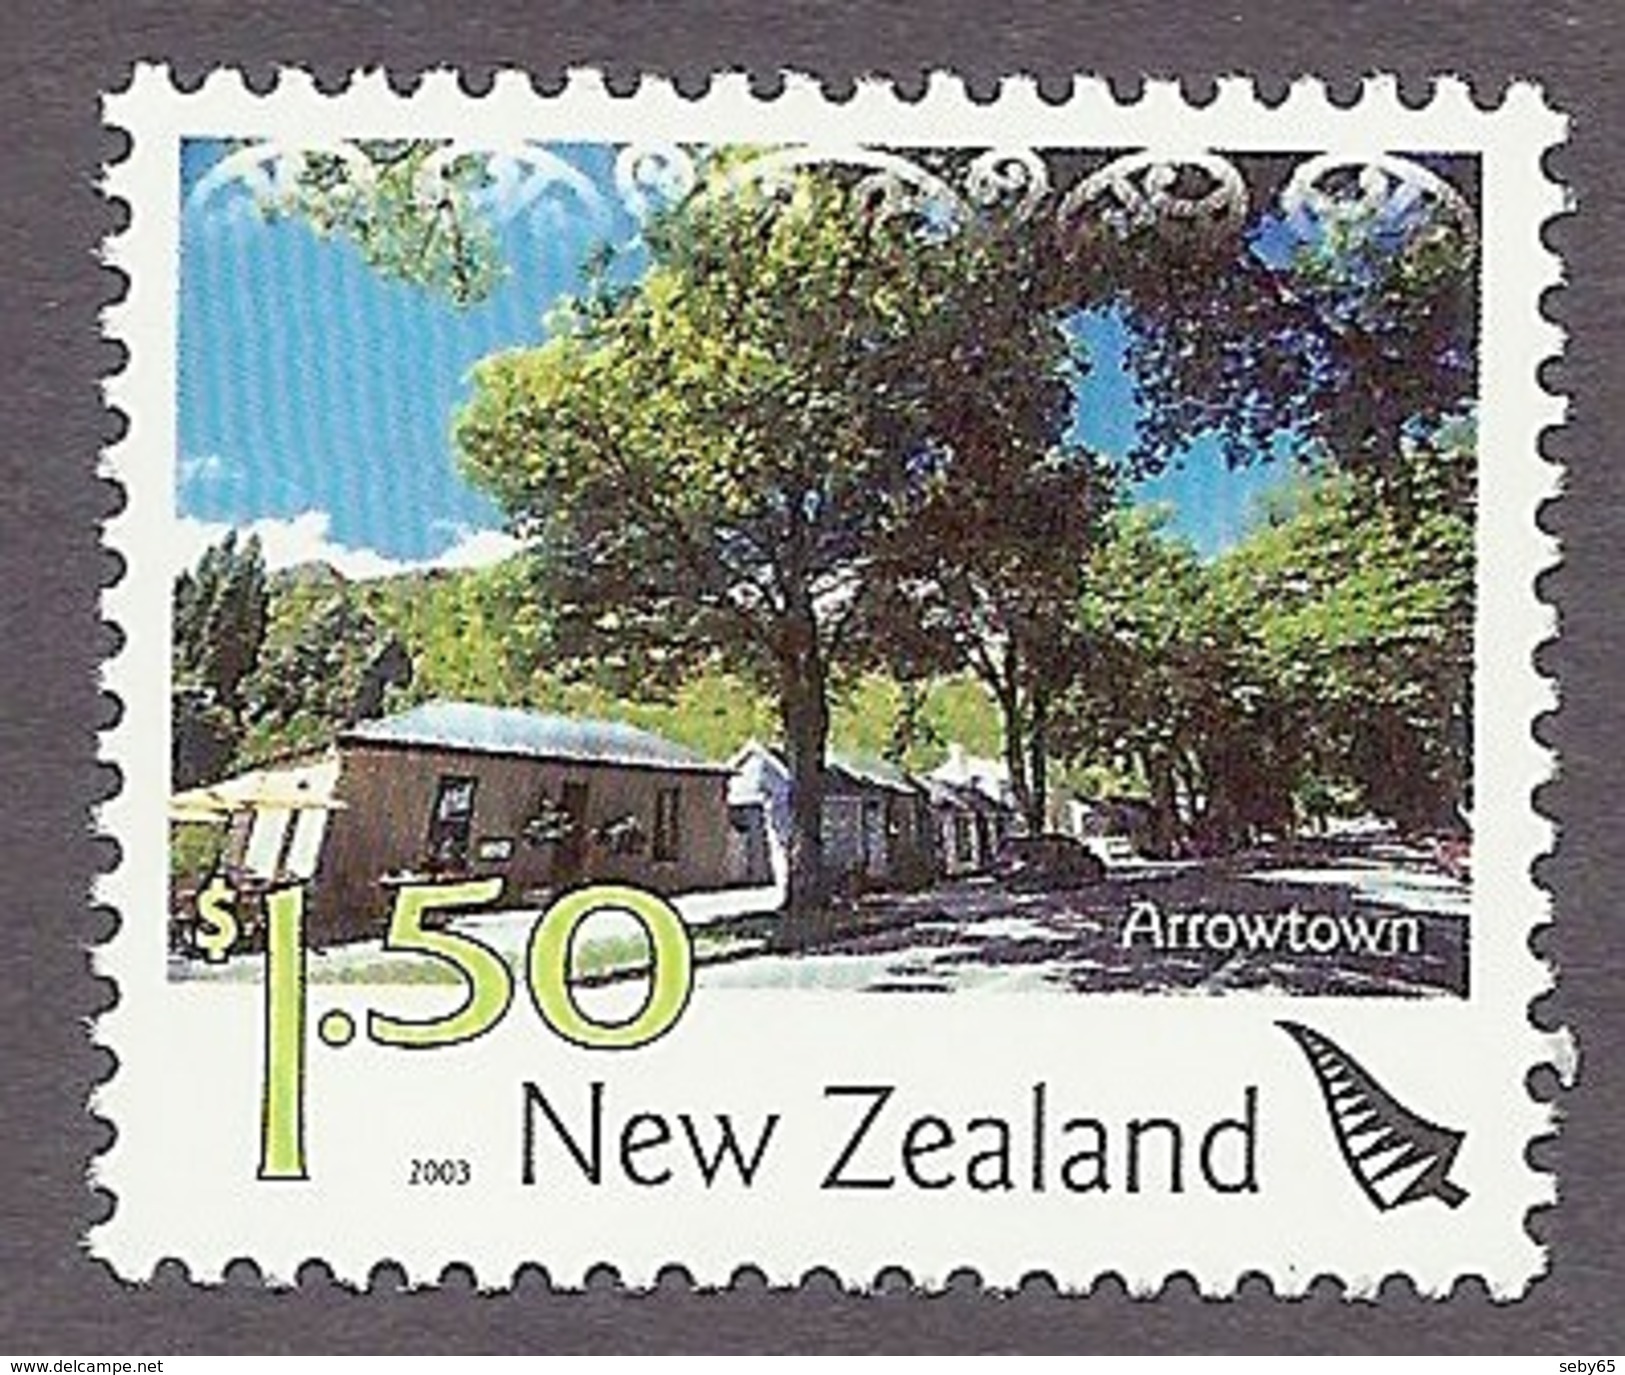 New Zealand 2003 Scenery, Scenic - Arrowtown MNH - Ongebruikt